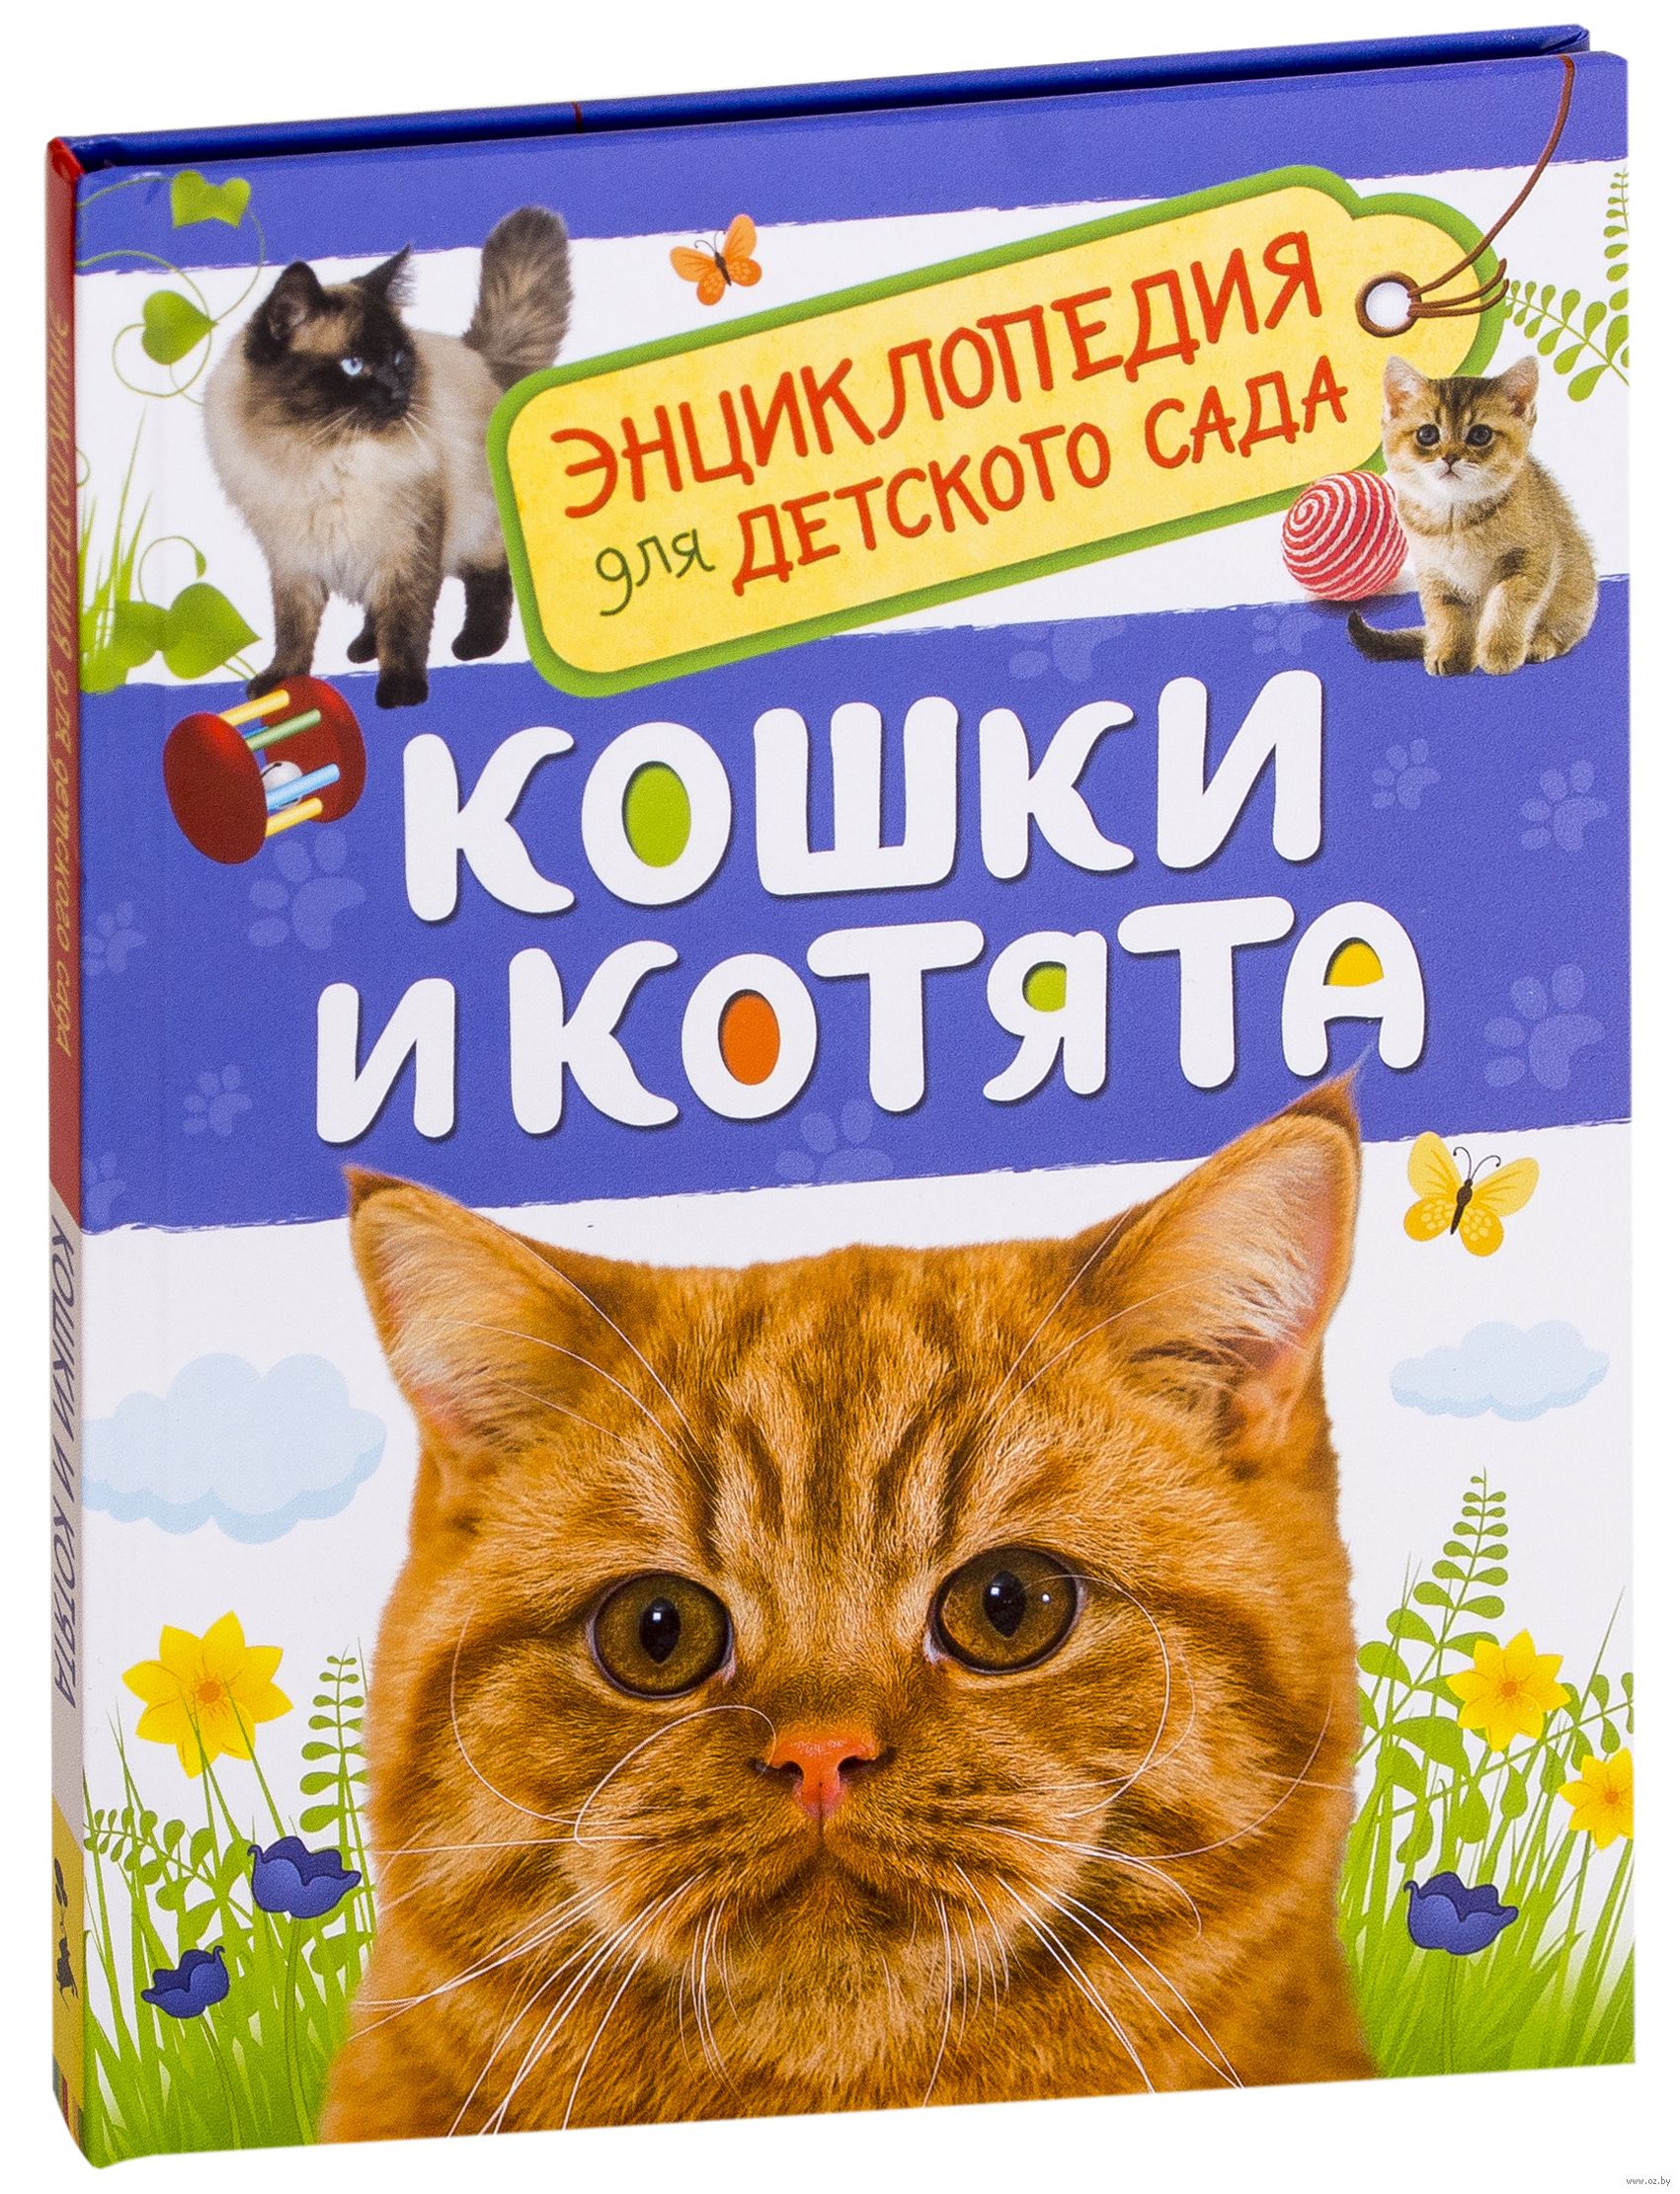 Отзывы про кошку. Книги про кошек. Книги про кошек для детей. Кошка с книжкой. Кошки и котята книга.